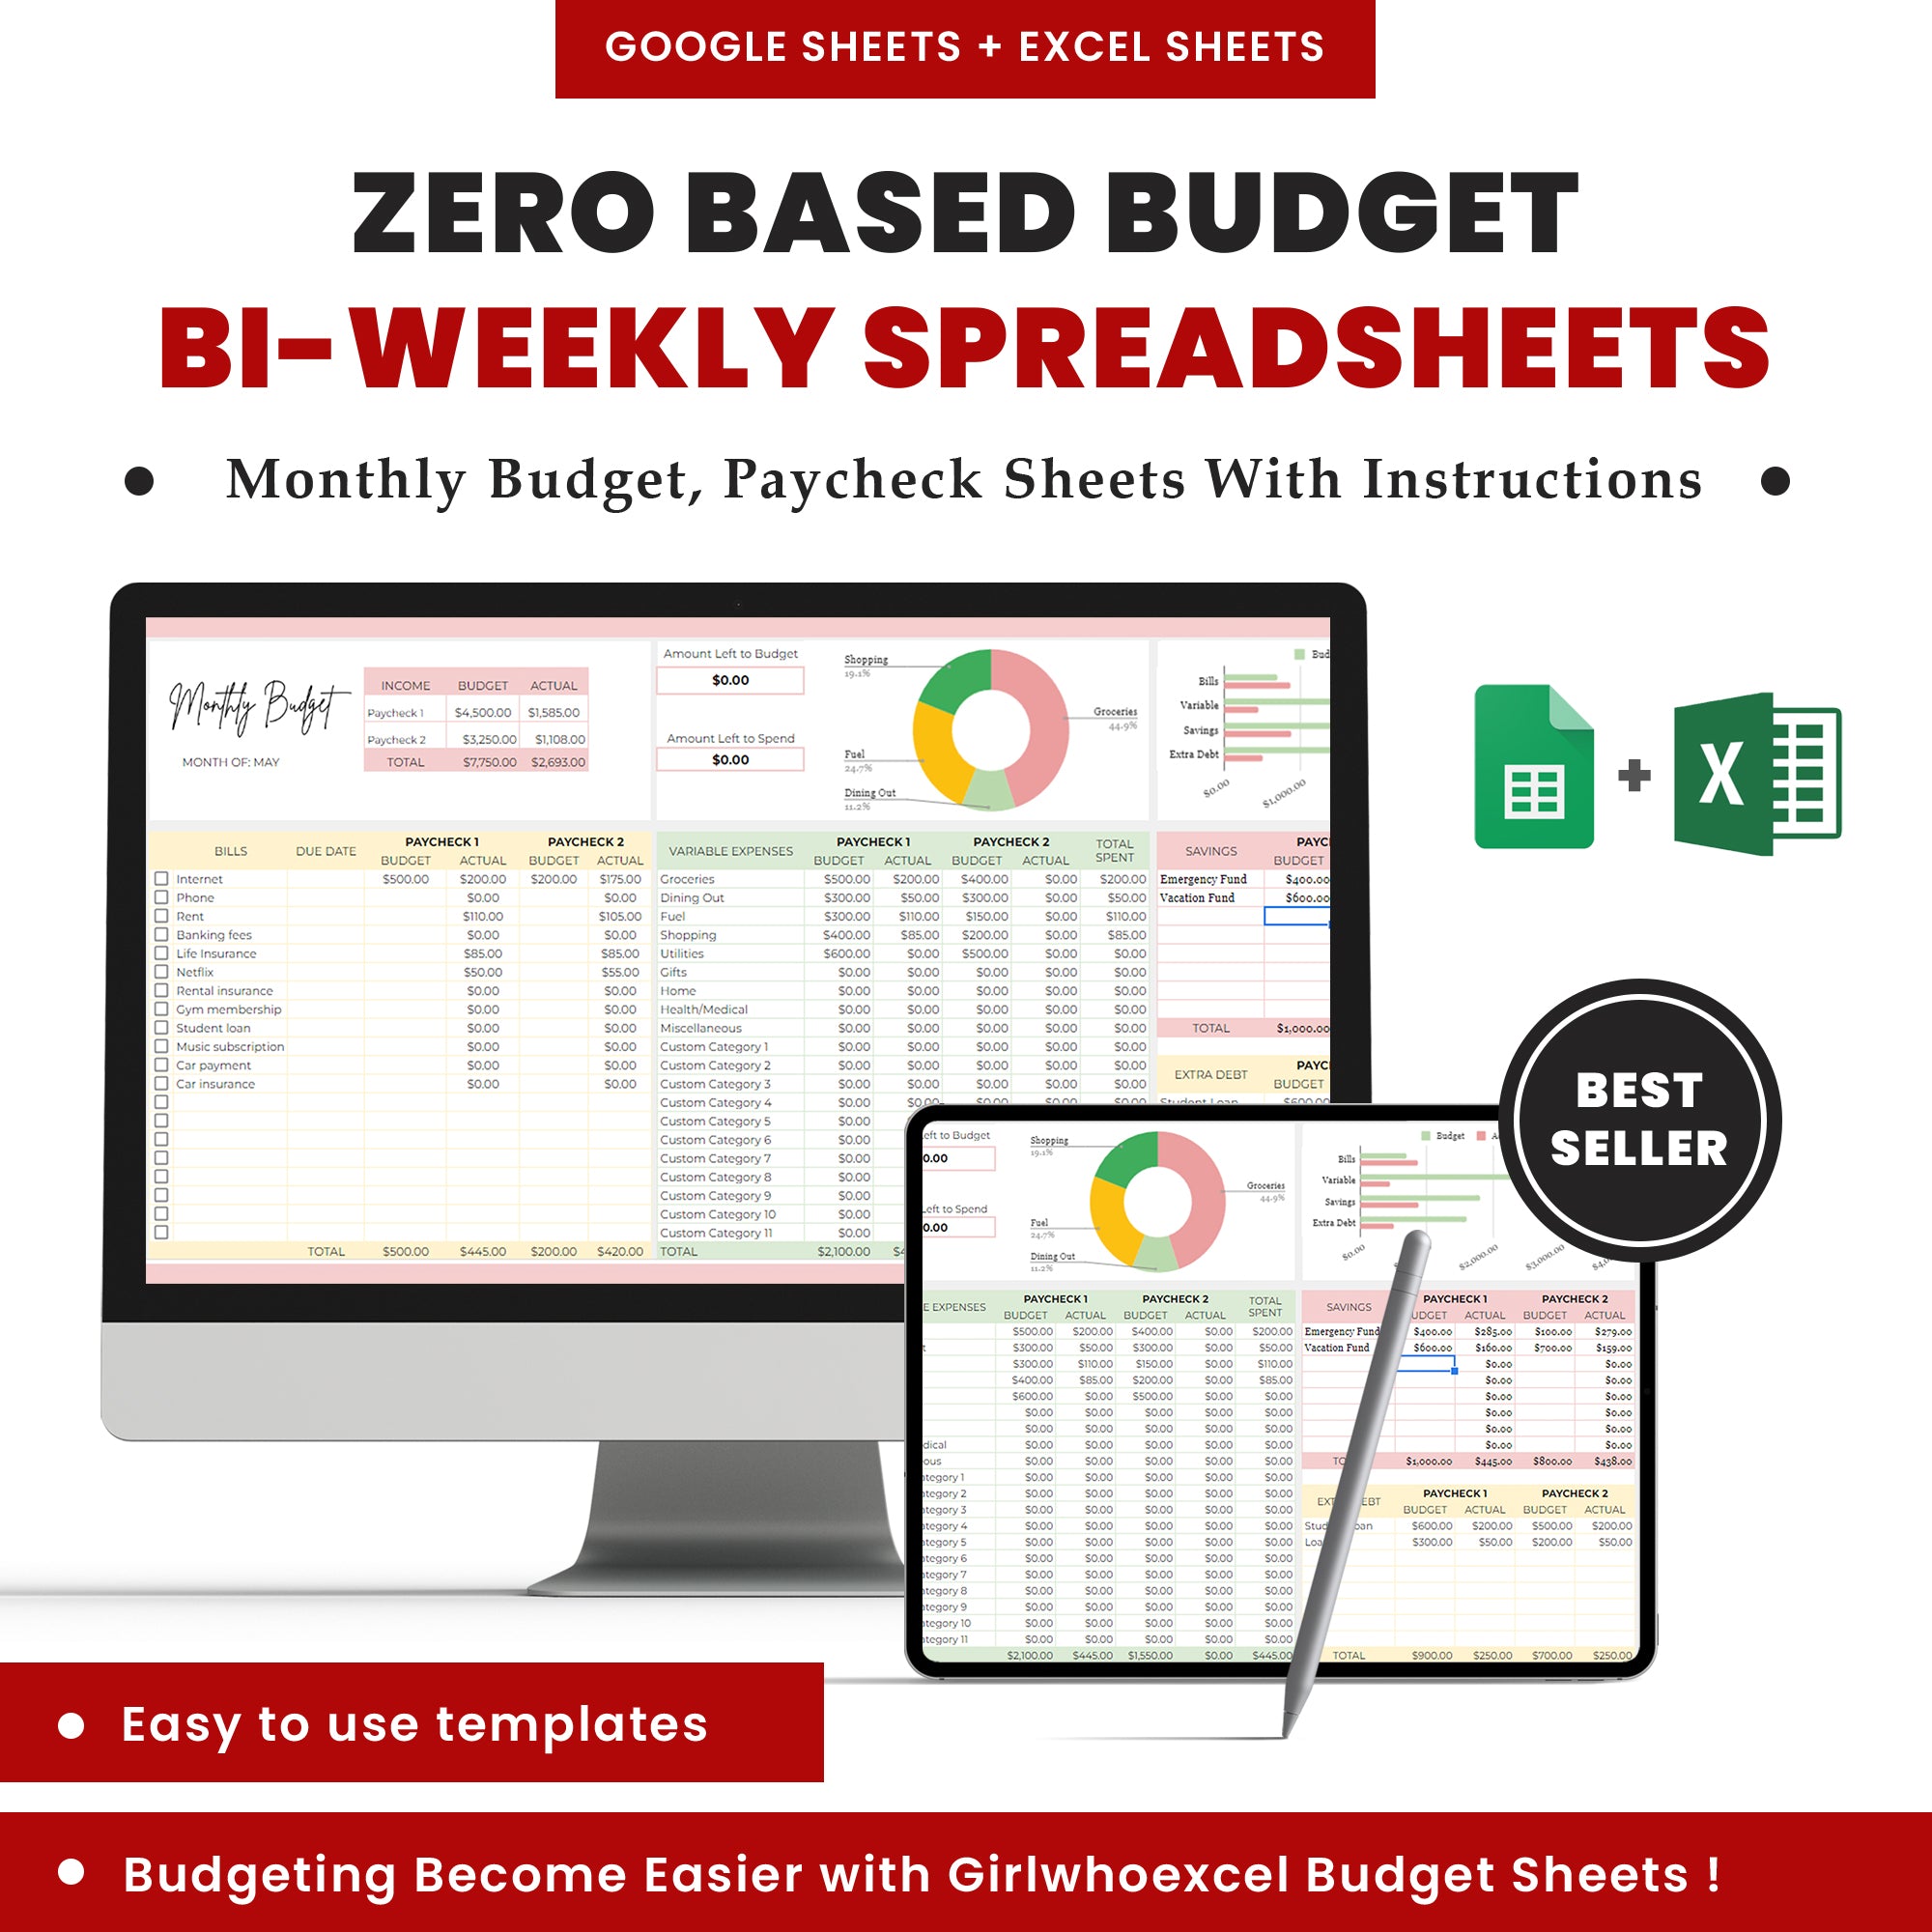 BiWeeklyBalance: Zero-Based Budget and Paycheck